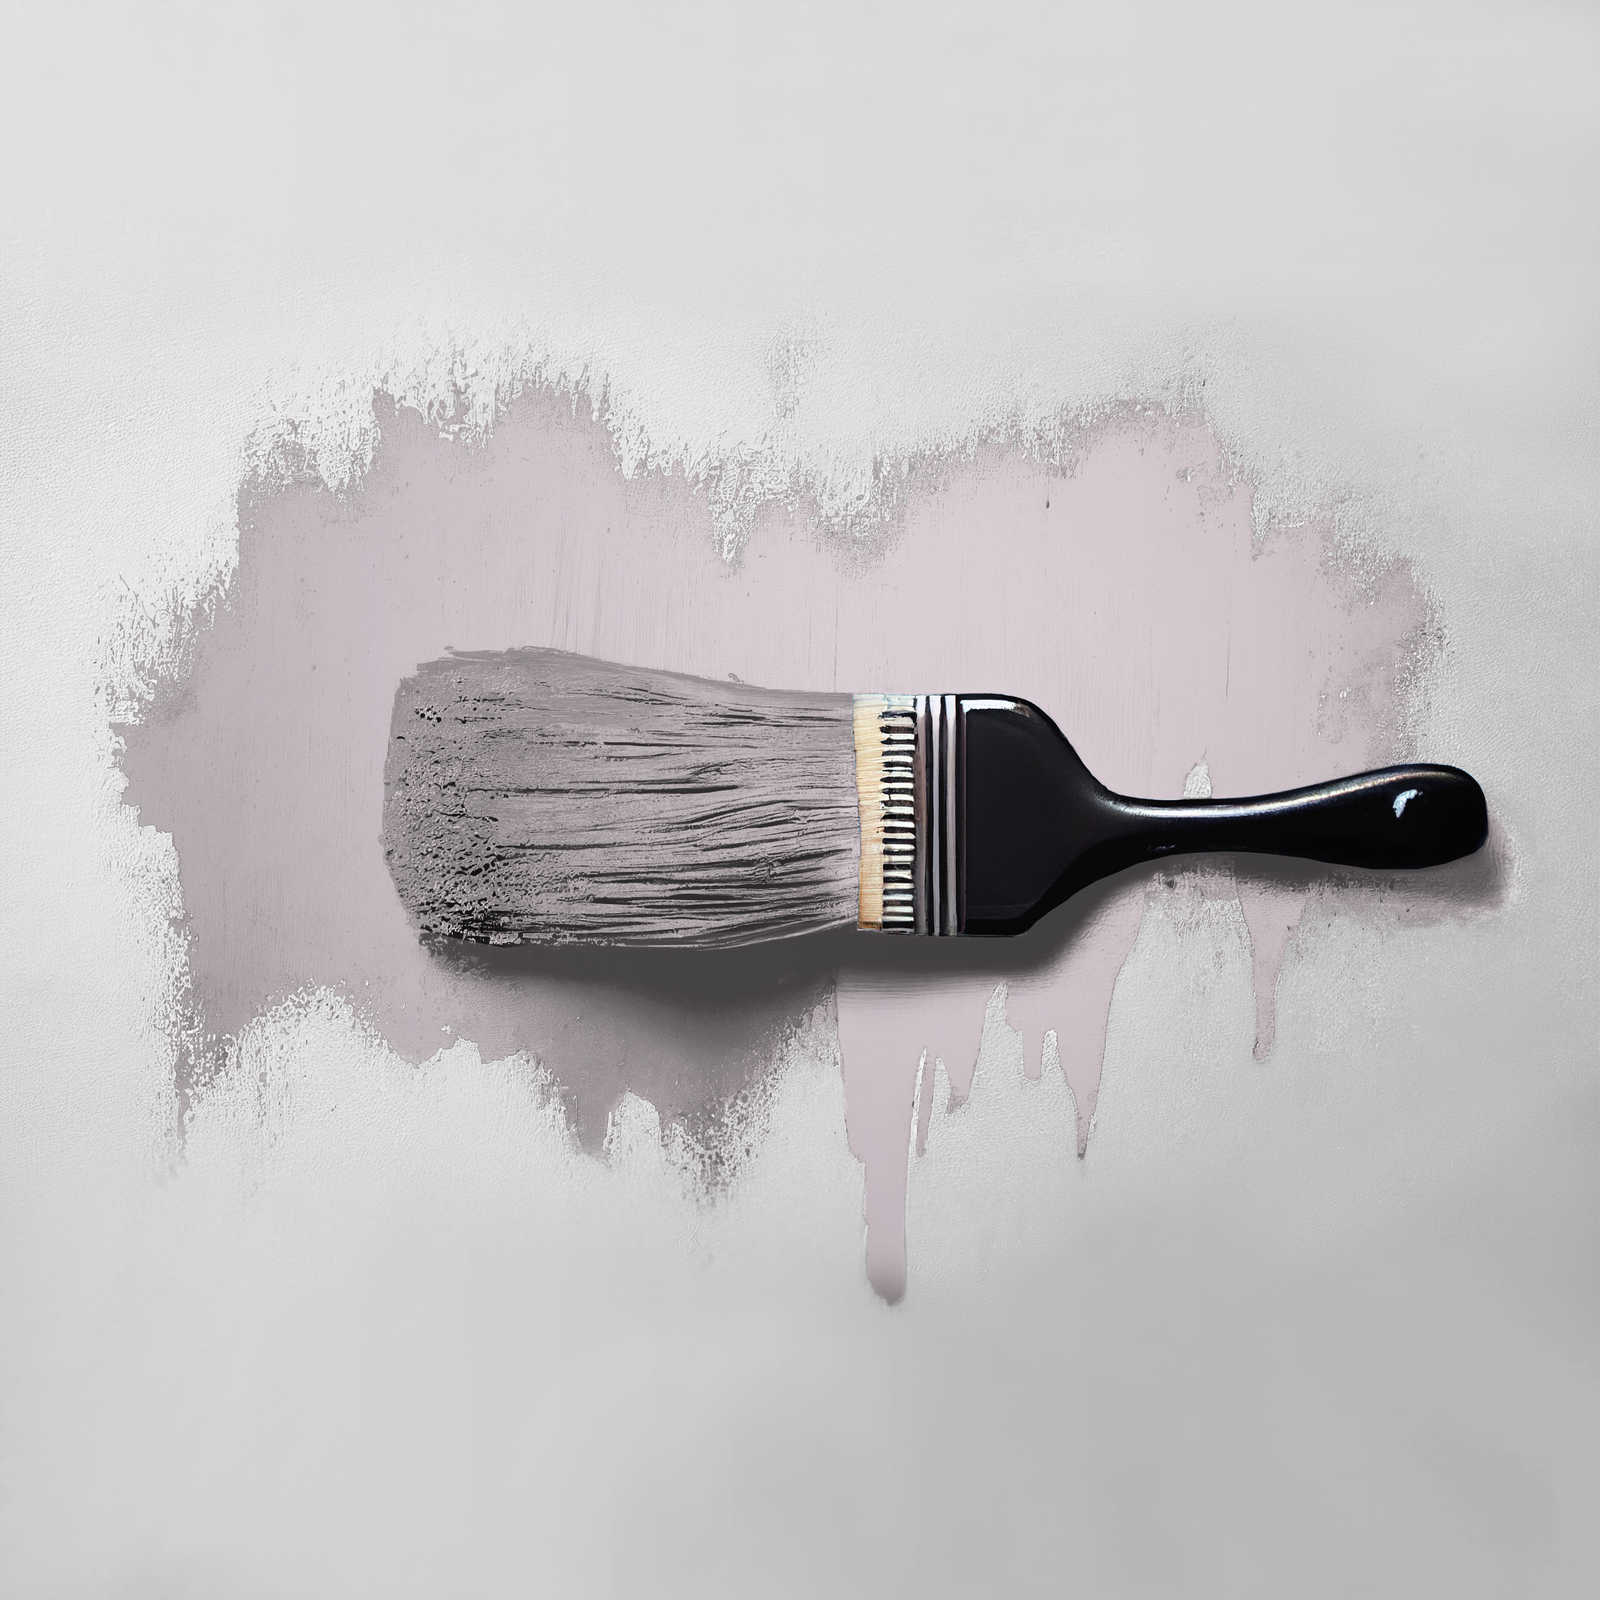             Pintura mural TCK2004 »Leafy Lavender« en tono lavanda frío – 2,5 litro
        